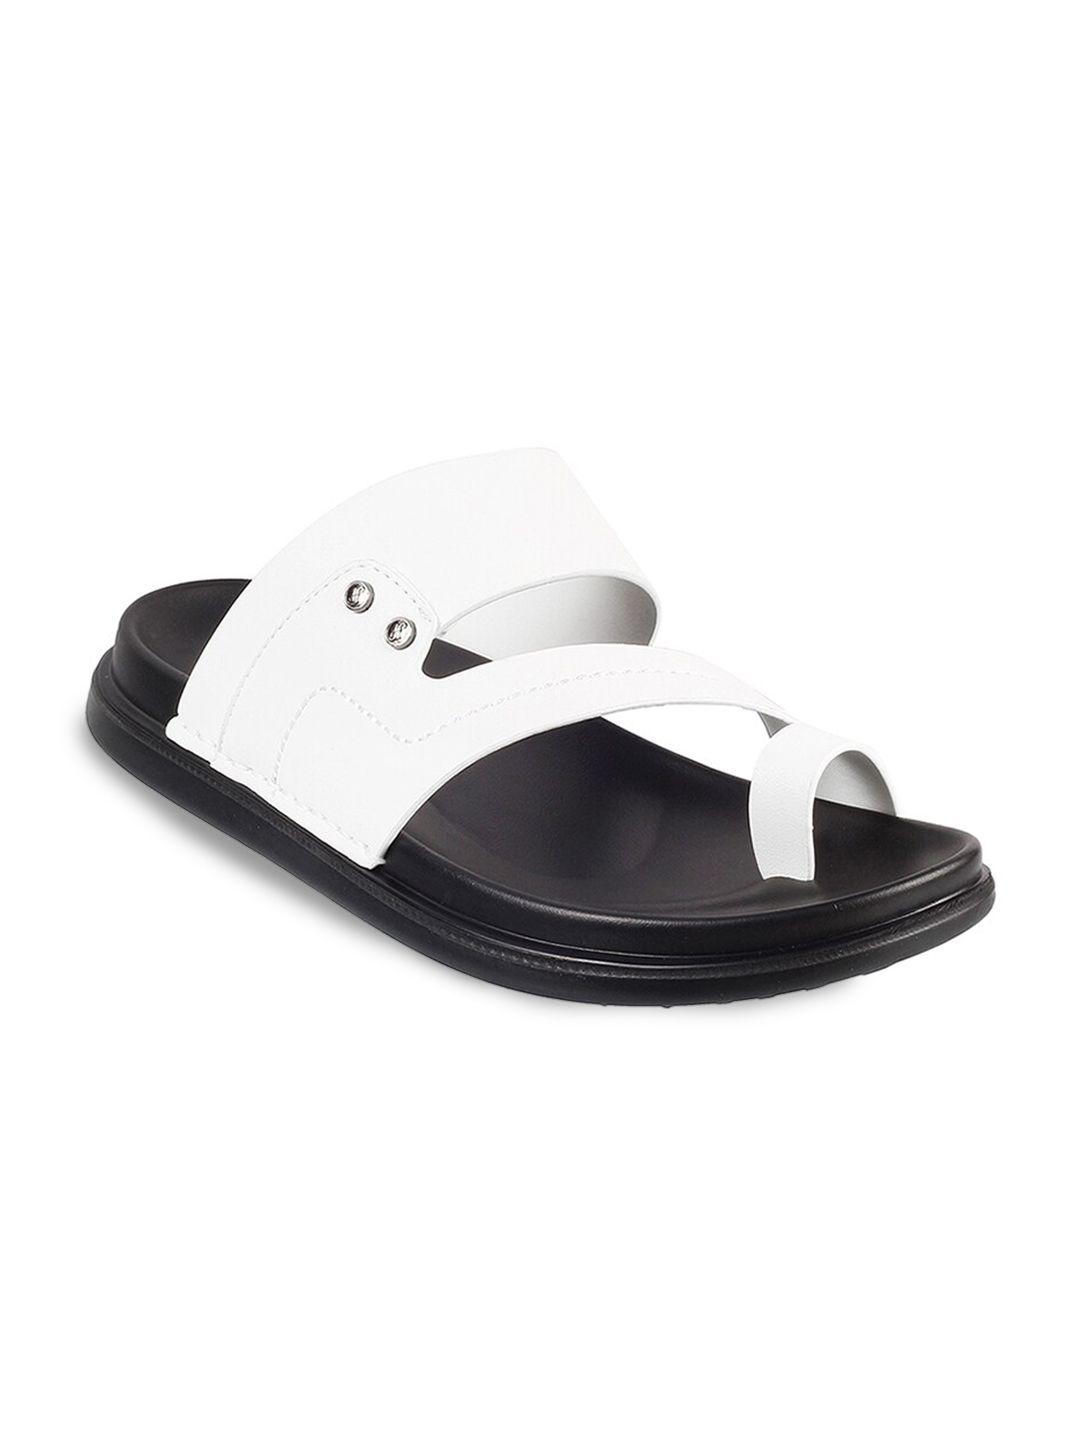 j fontini men white & black leather comfort sandals